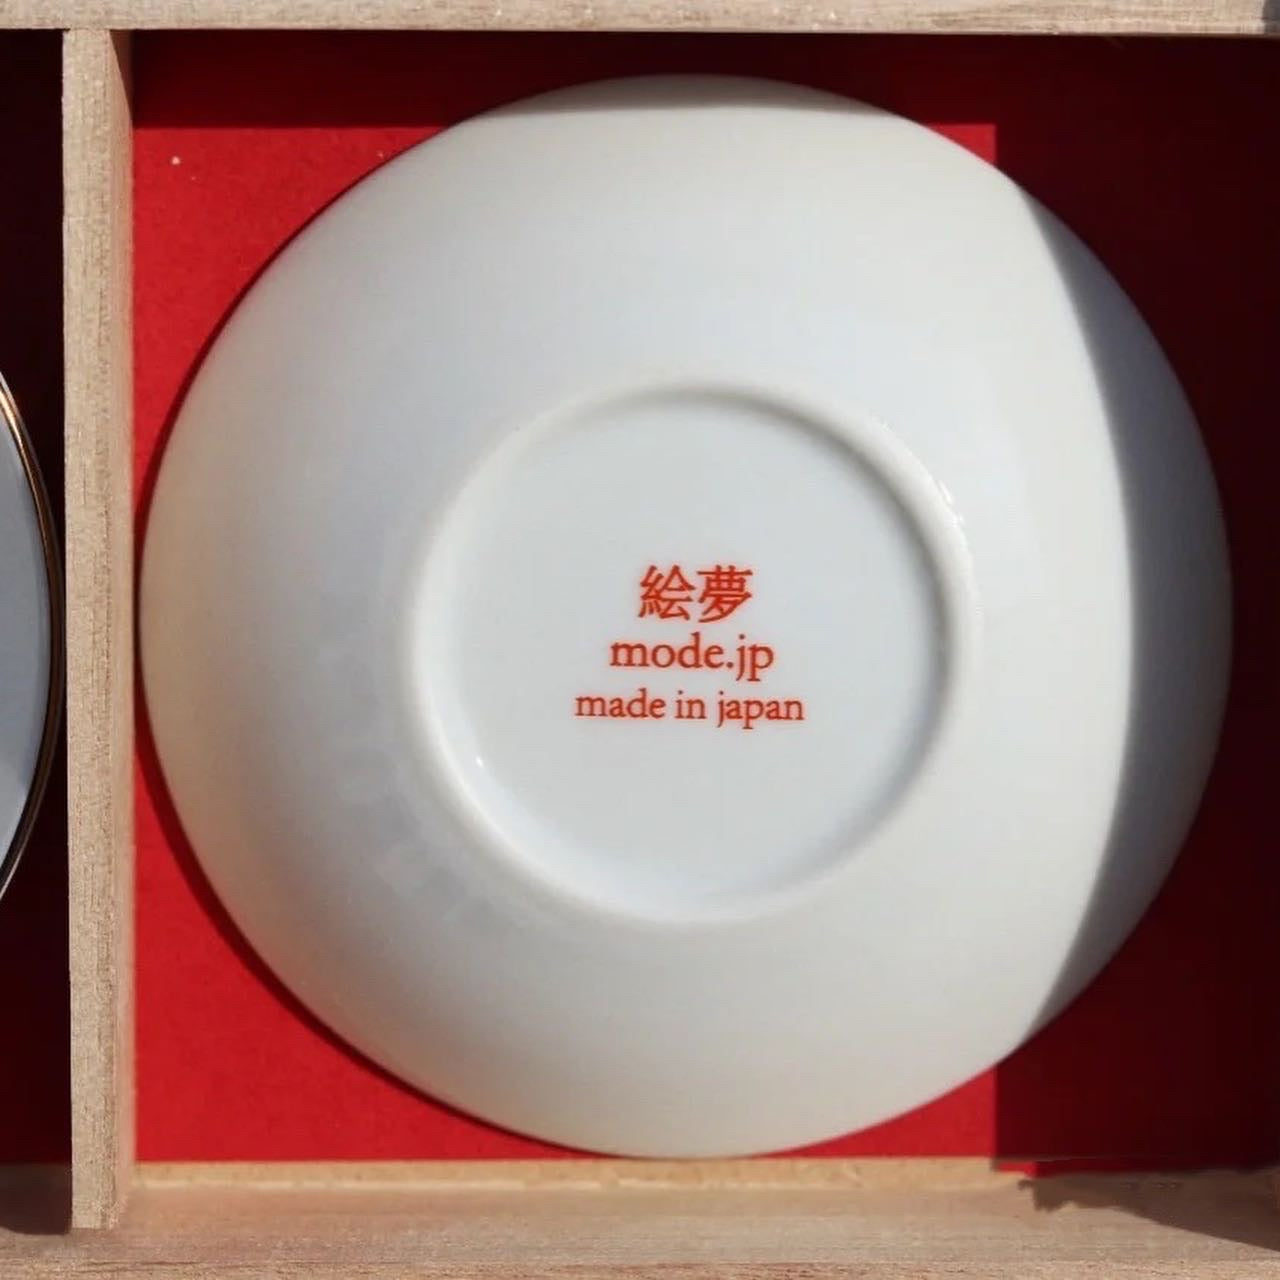 Mizuhiki日本傳統平安結小碟禮盒